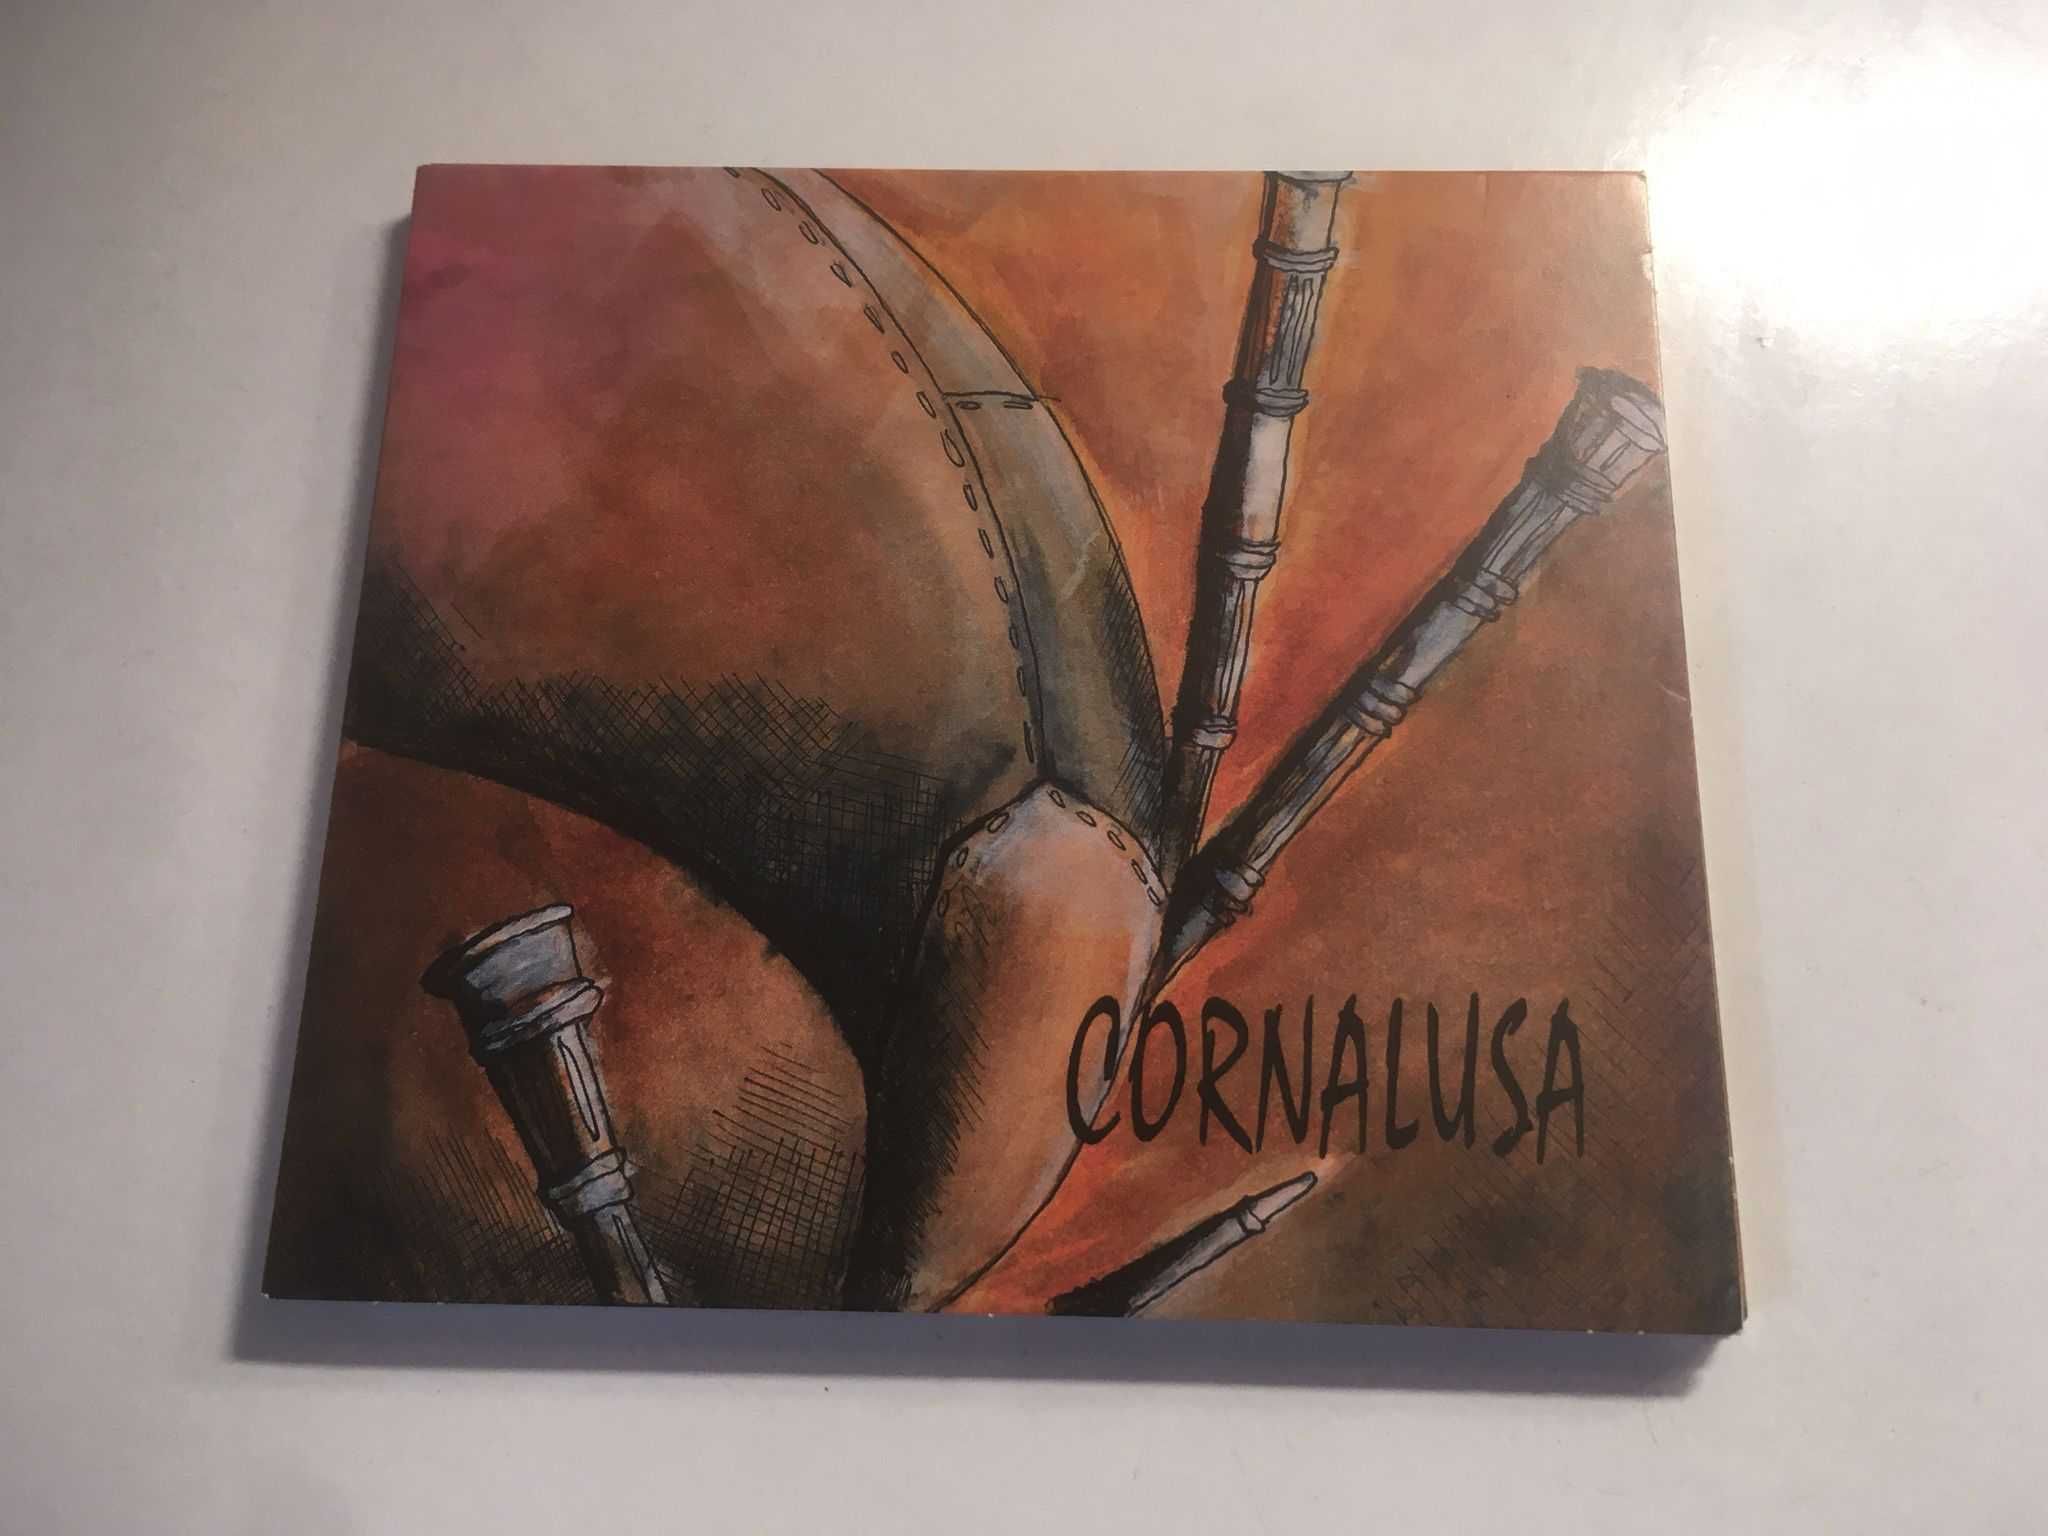 CD - Cornalusa (NOVO)